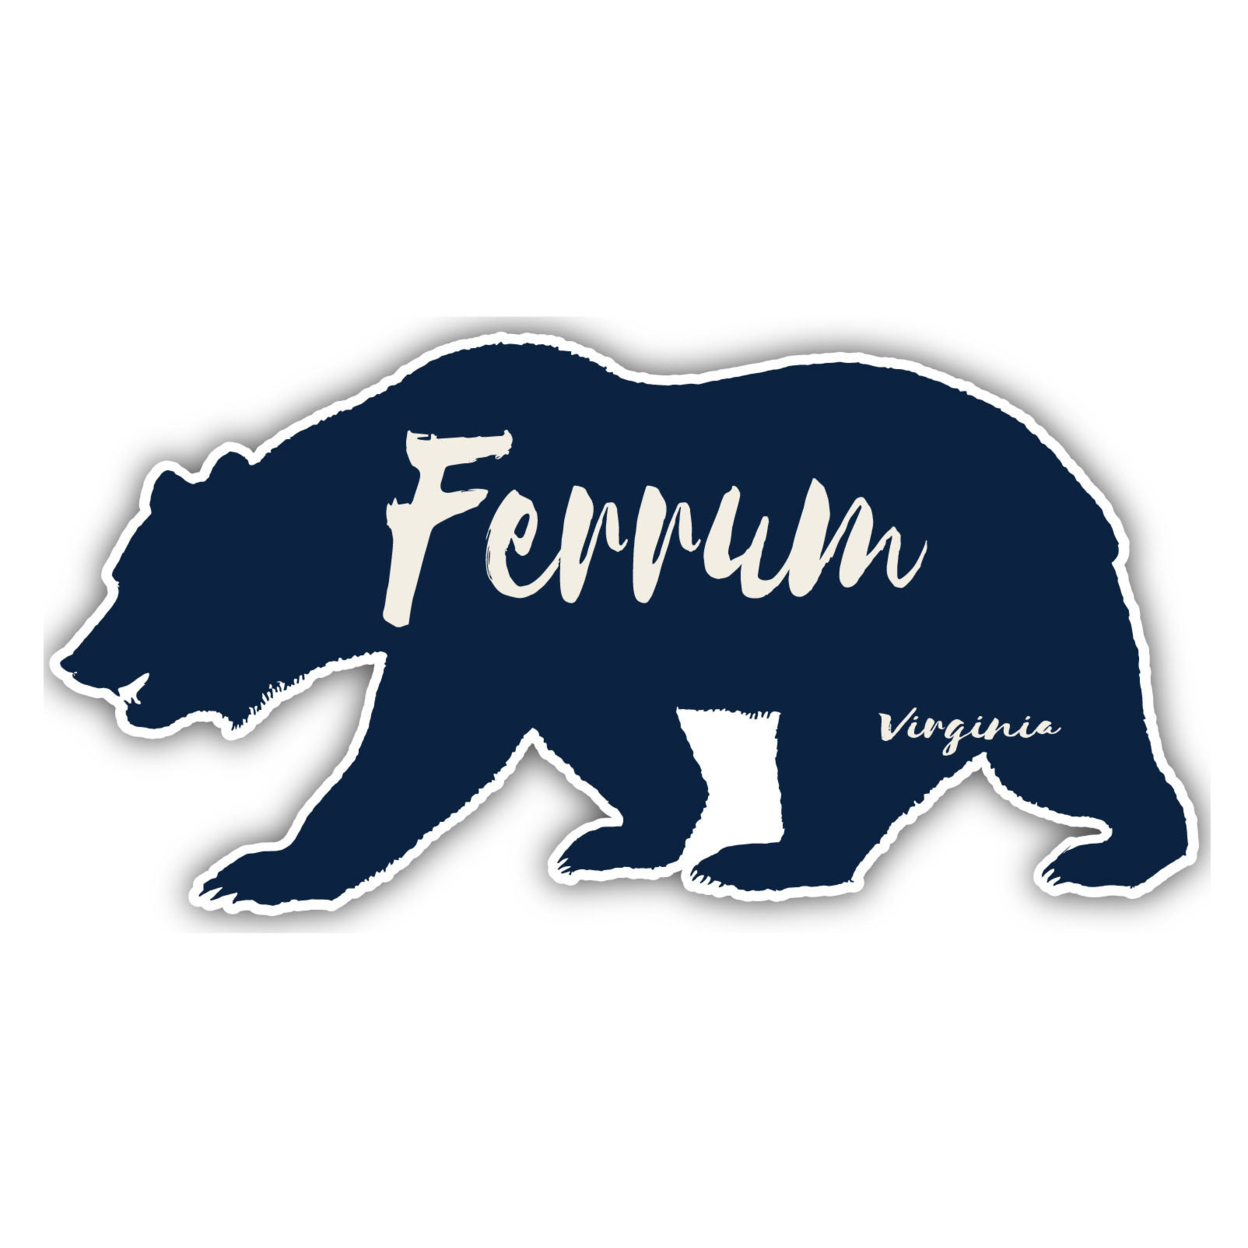 Ferrum Virginia Souvenir Decorative Stickers (Choose Theme And Size) - Single Unit, 4-Inch, Bear